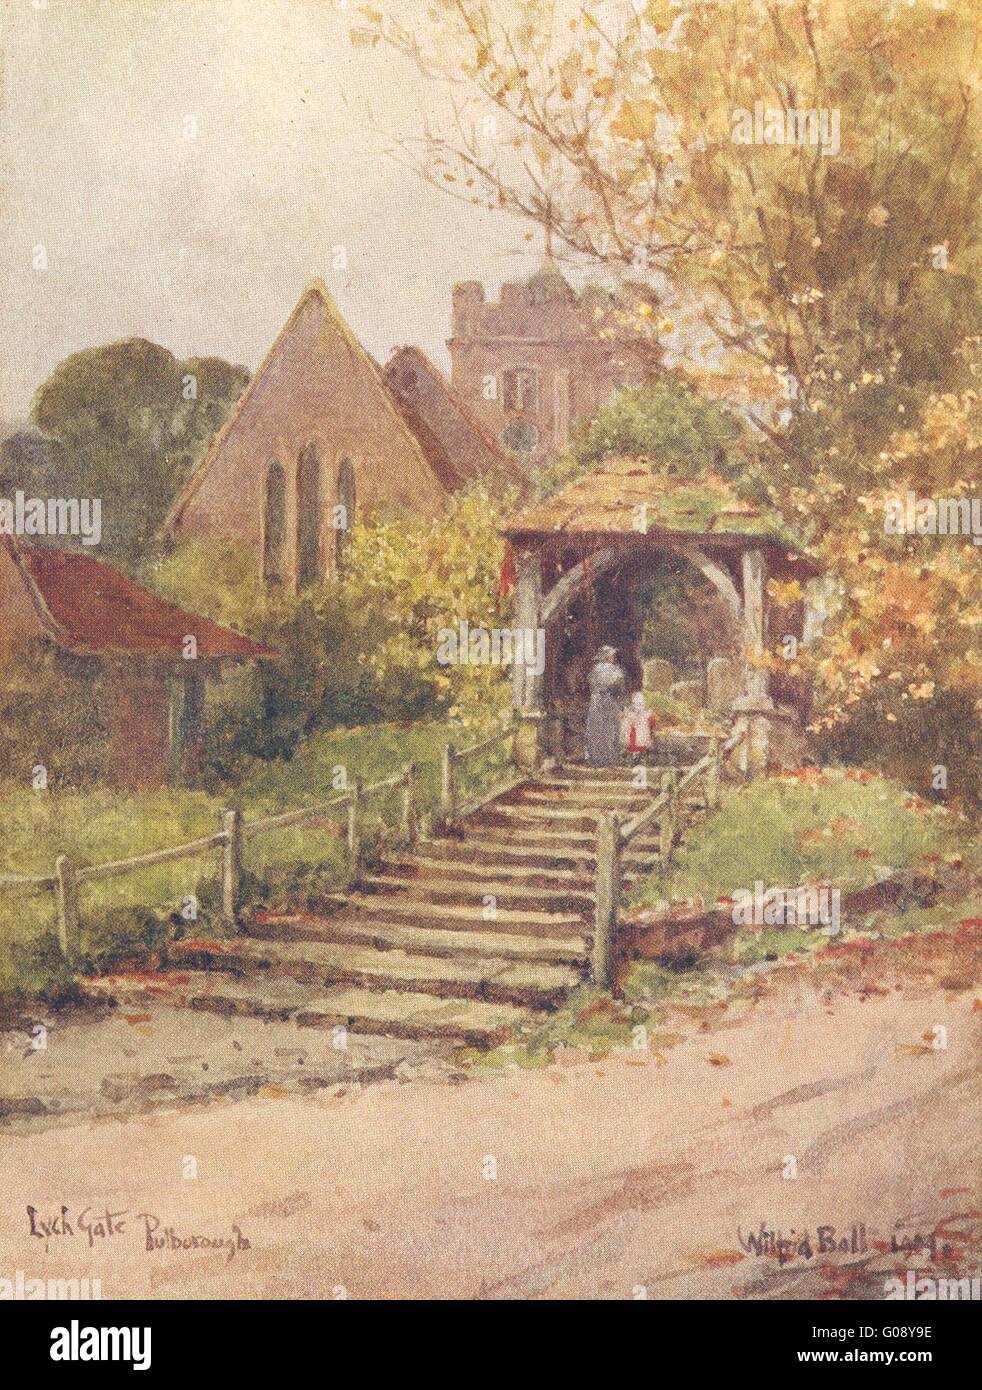 SUSSEX: Lych Gate, Pulborough, antique print 1906 Stock Photo